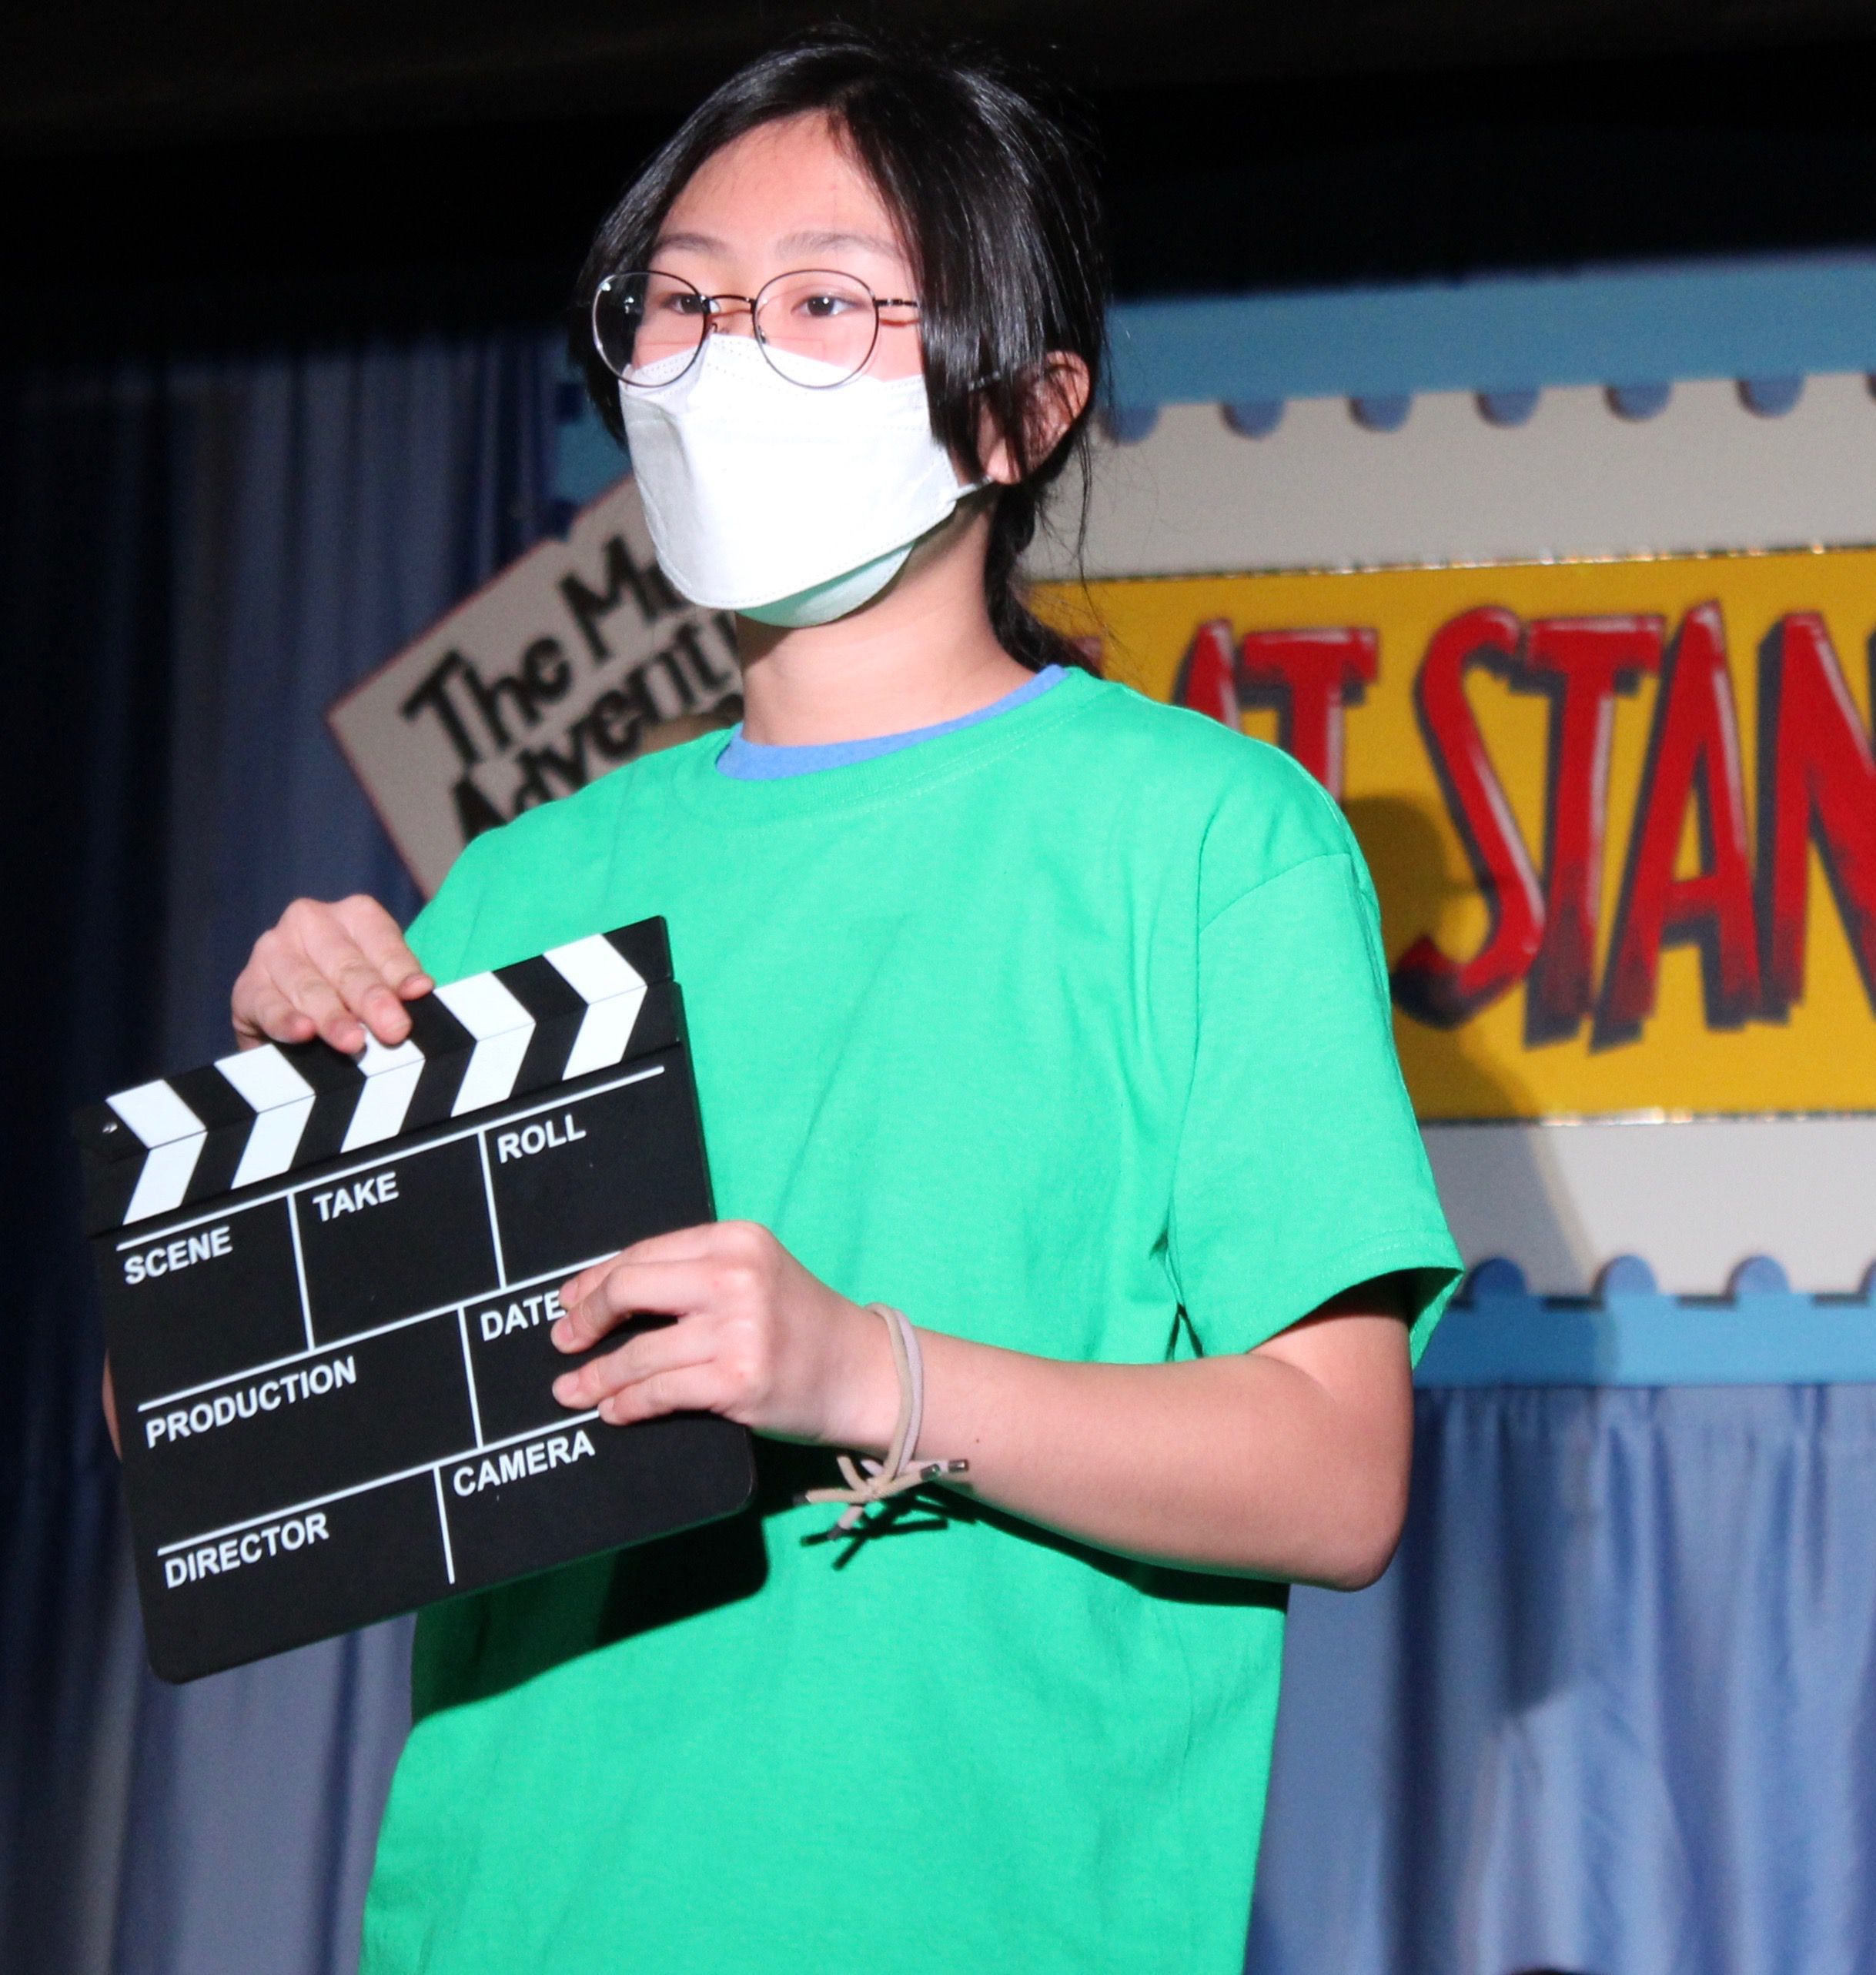 girl in school play holding a scene slate